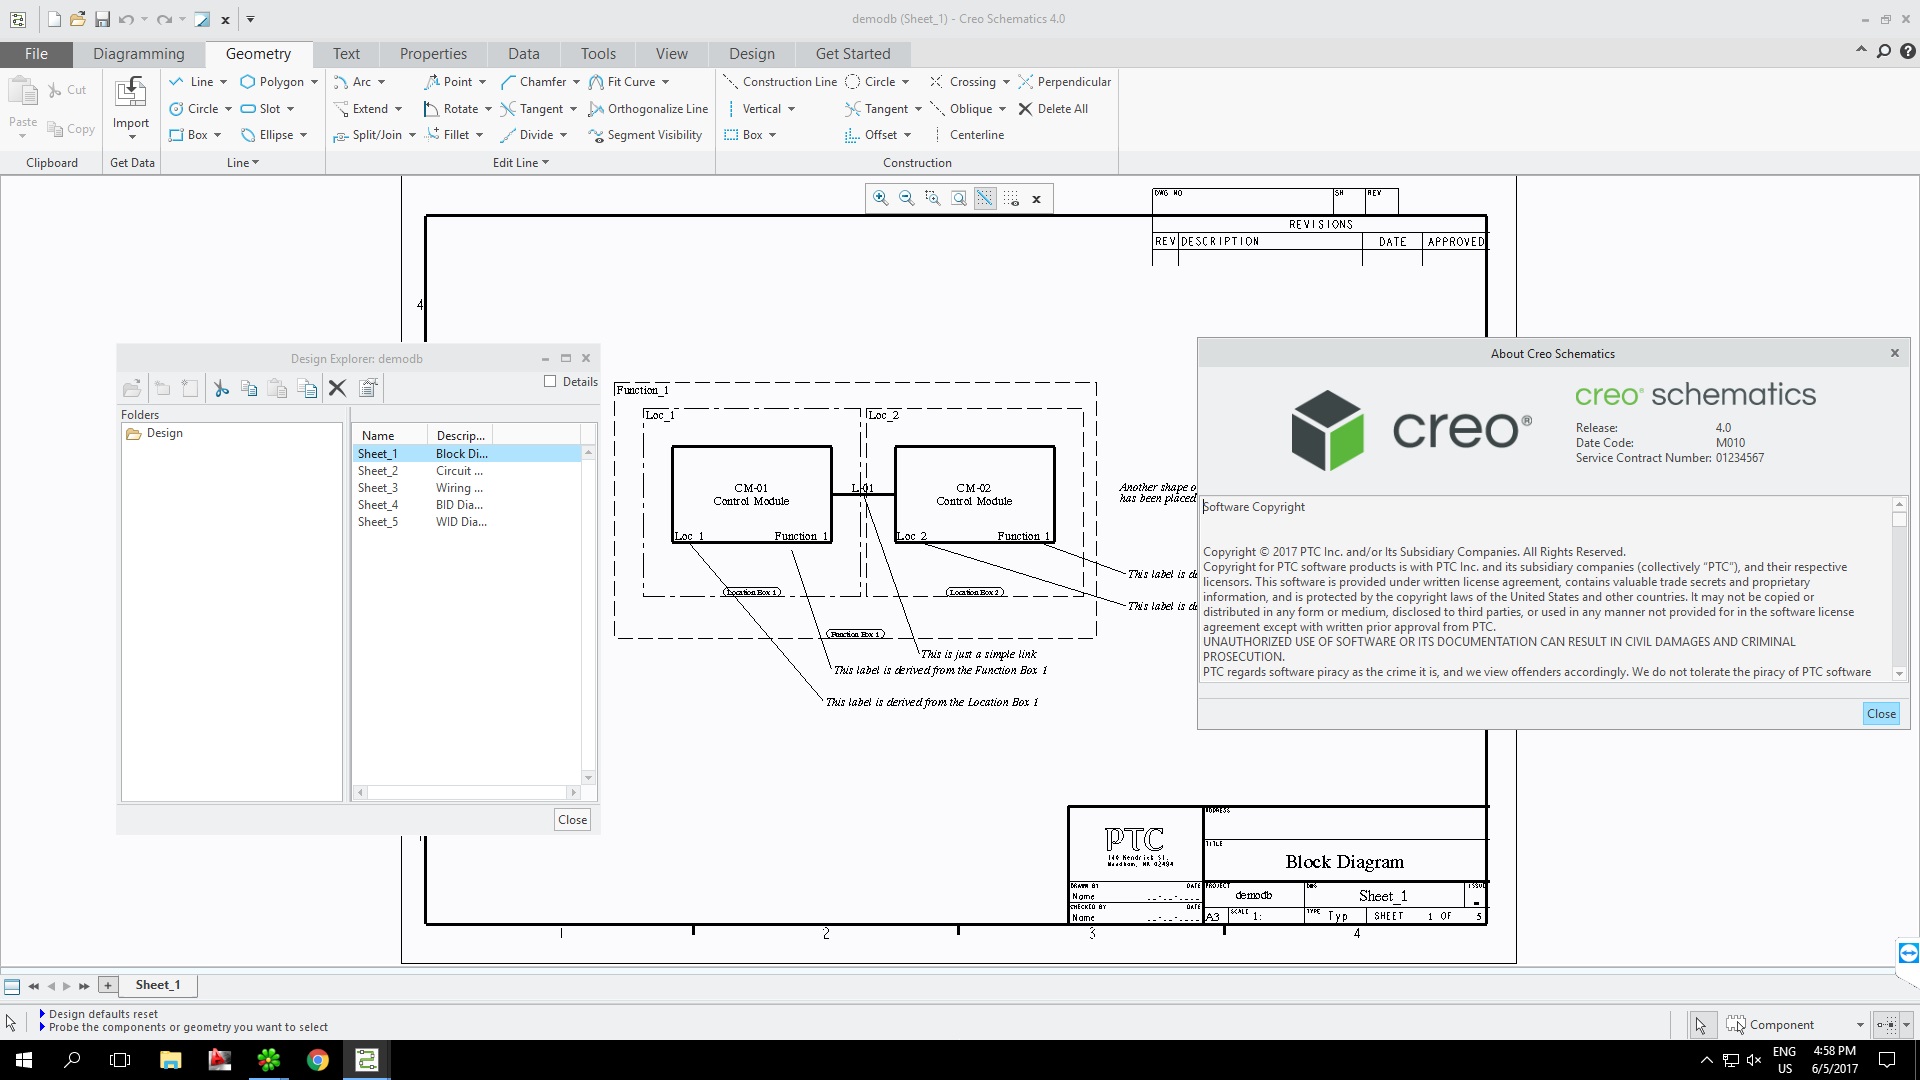 Working with PTC Creo Schematics 4.0 M010 full license